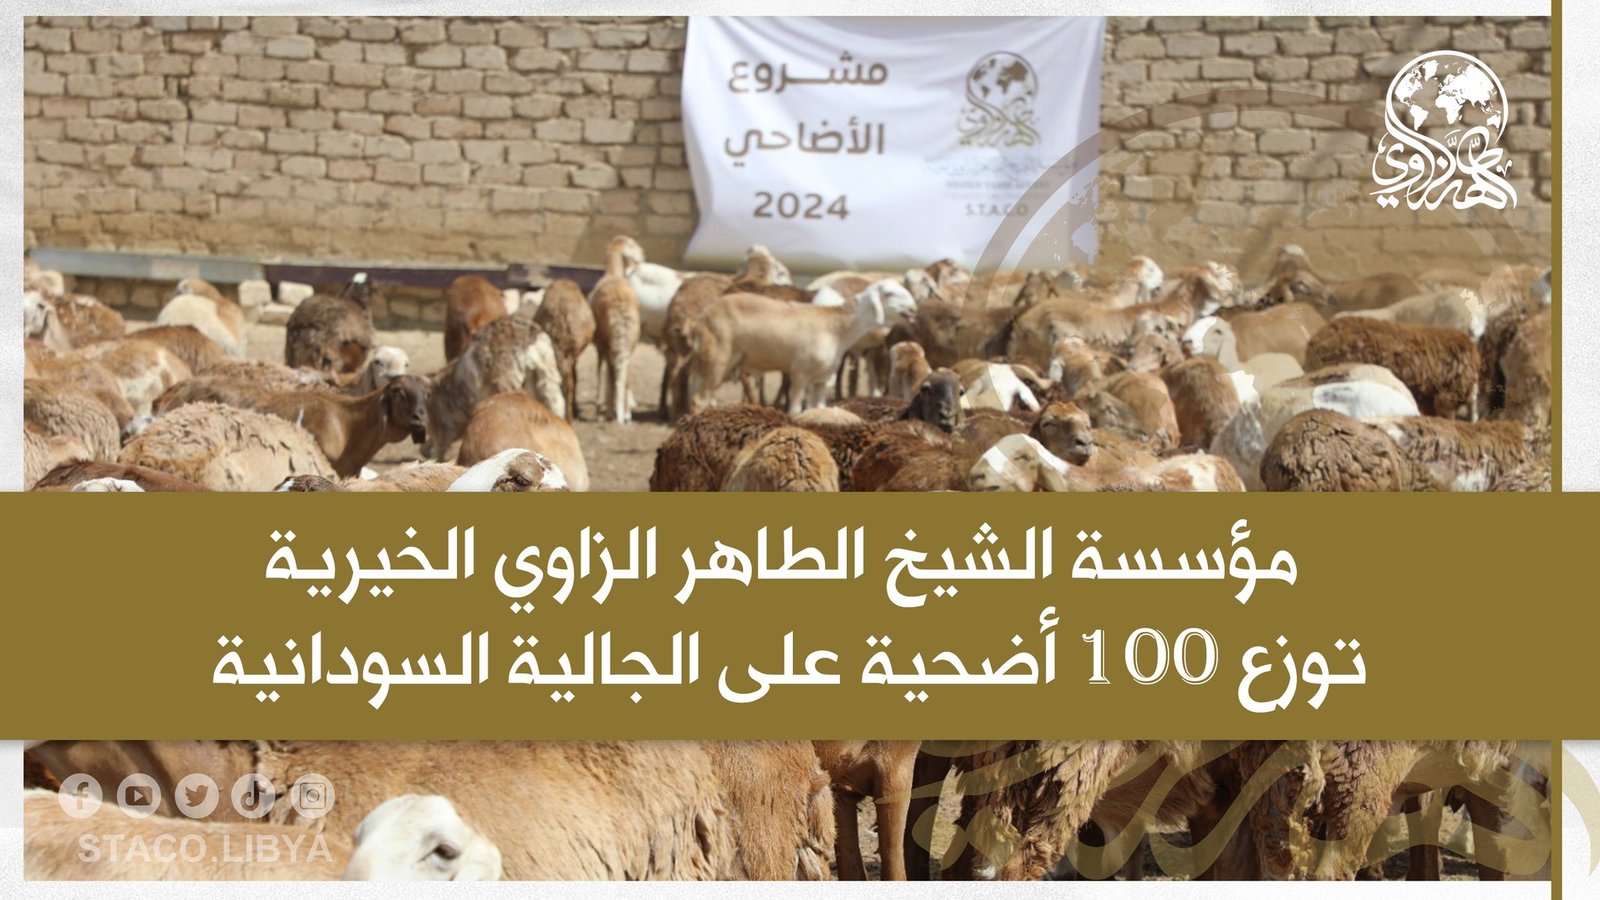 The Sheikh Tahir Al-Zzawi charity organization distributes 100 sacrifices to the Sudanese community